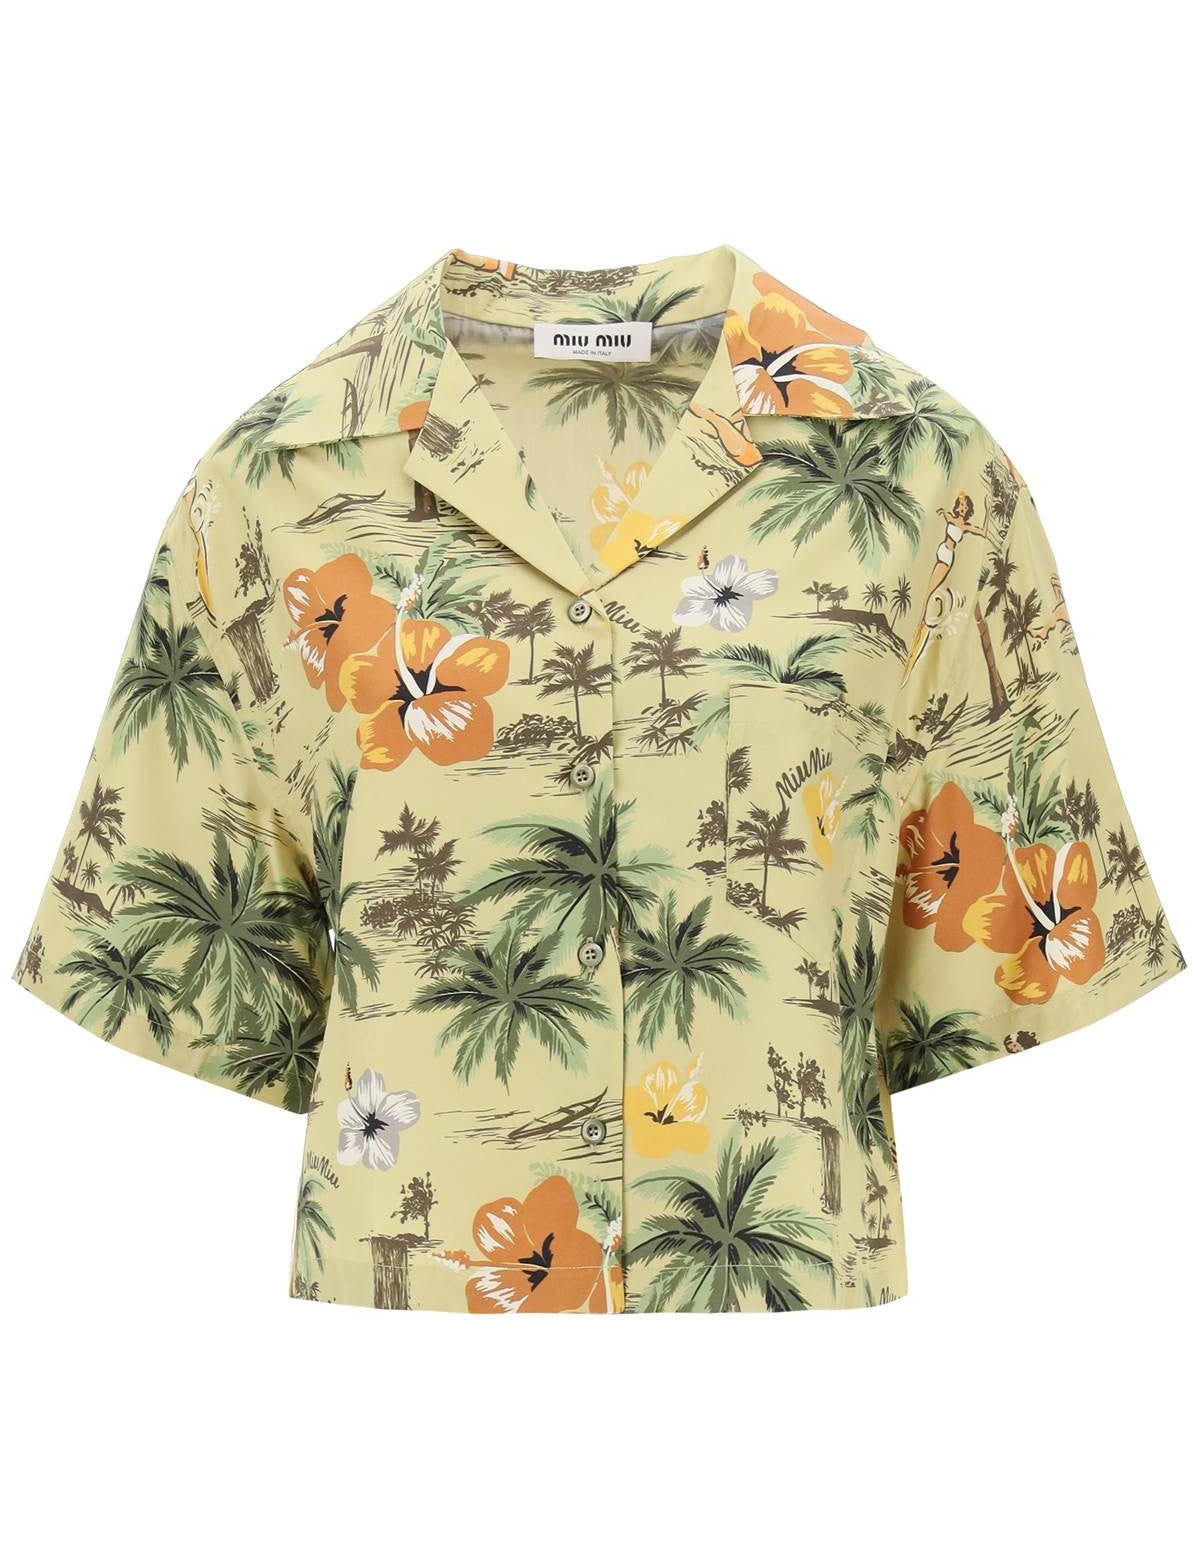 miu-miu-hawaii-silk-boxy-shirt.jpg